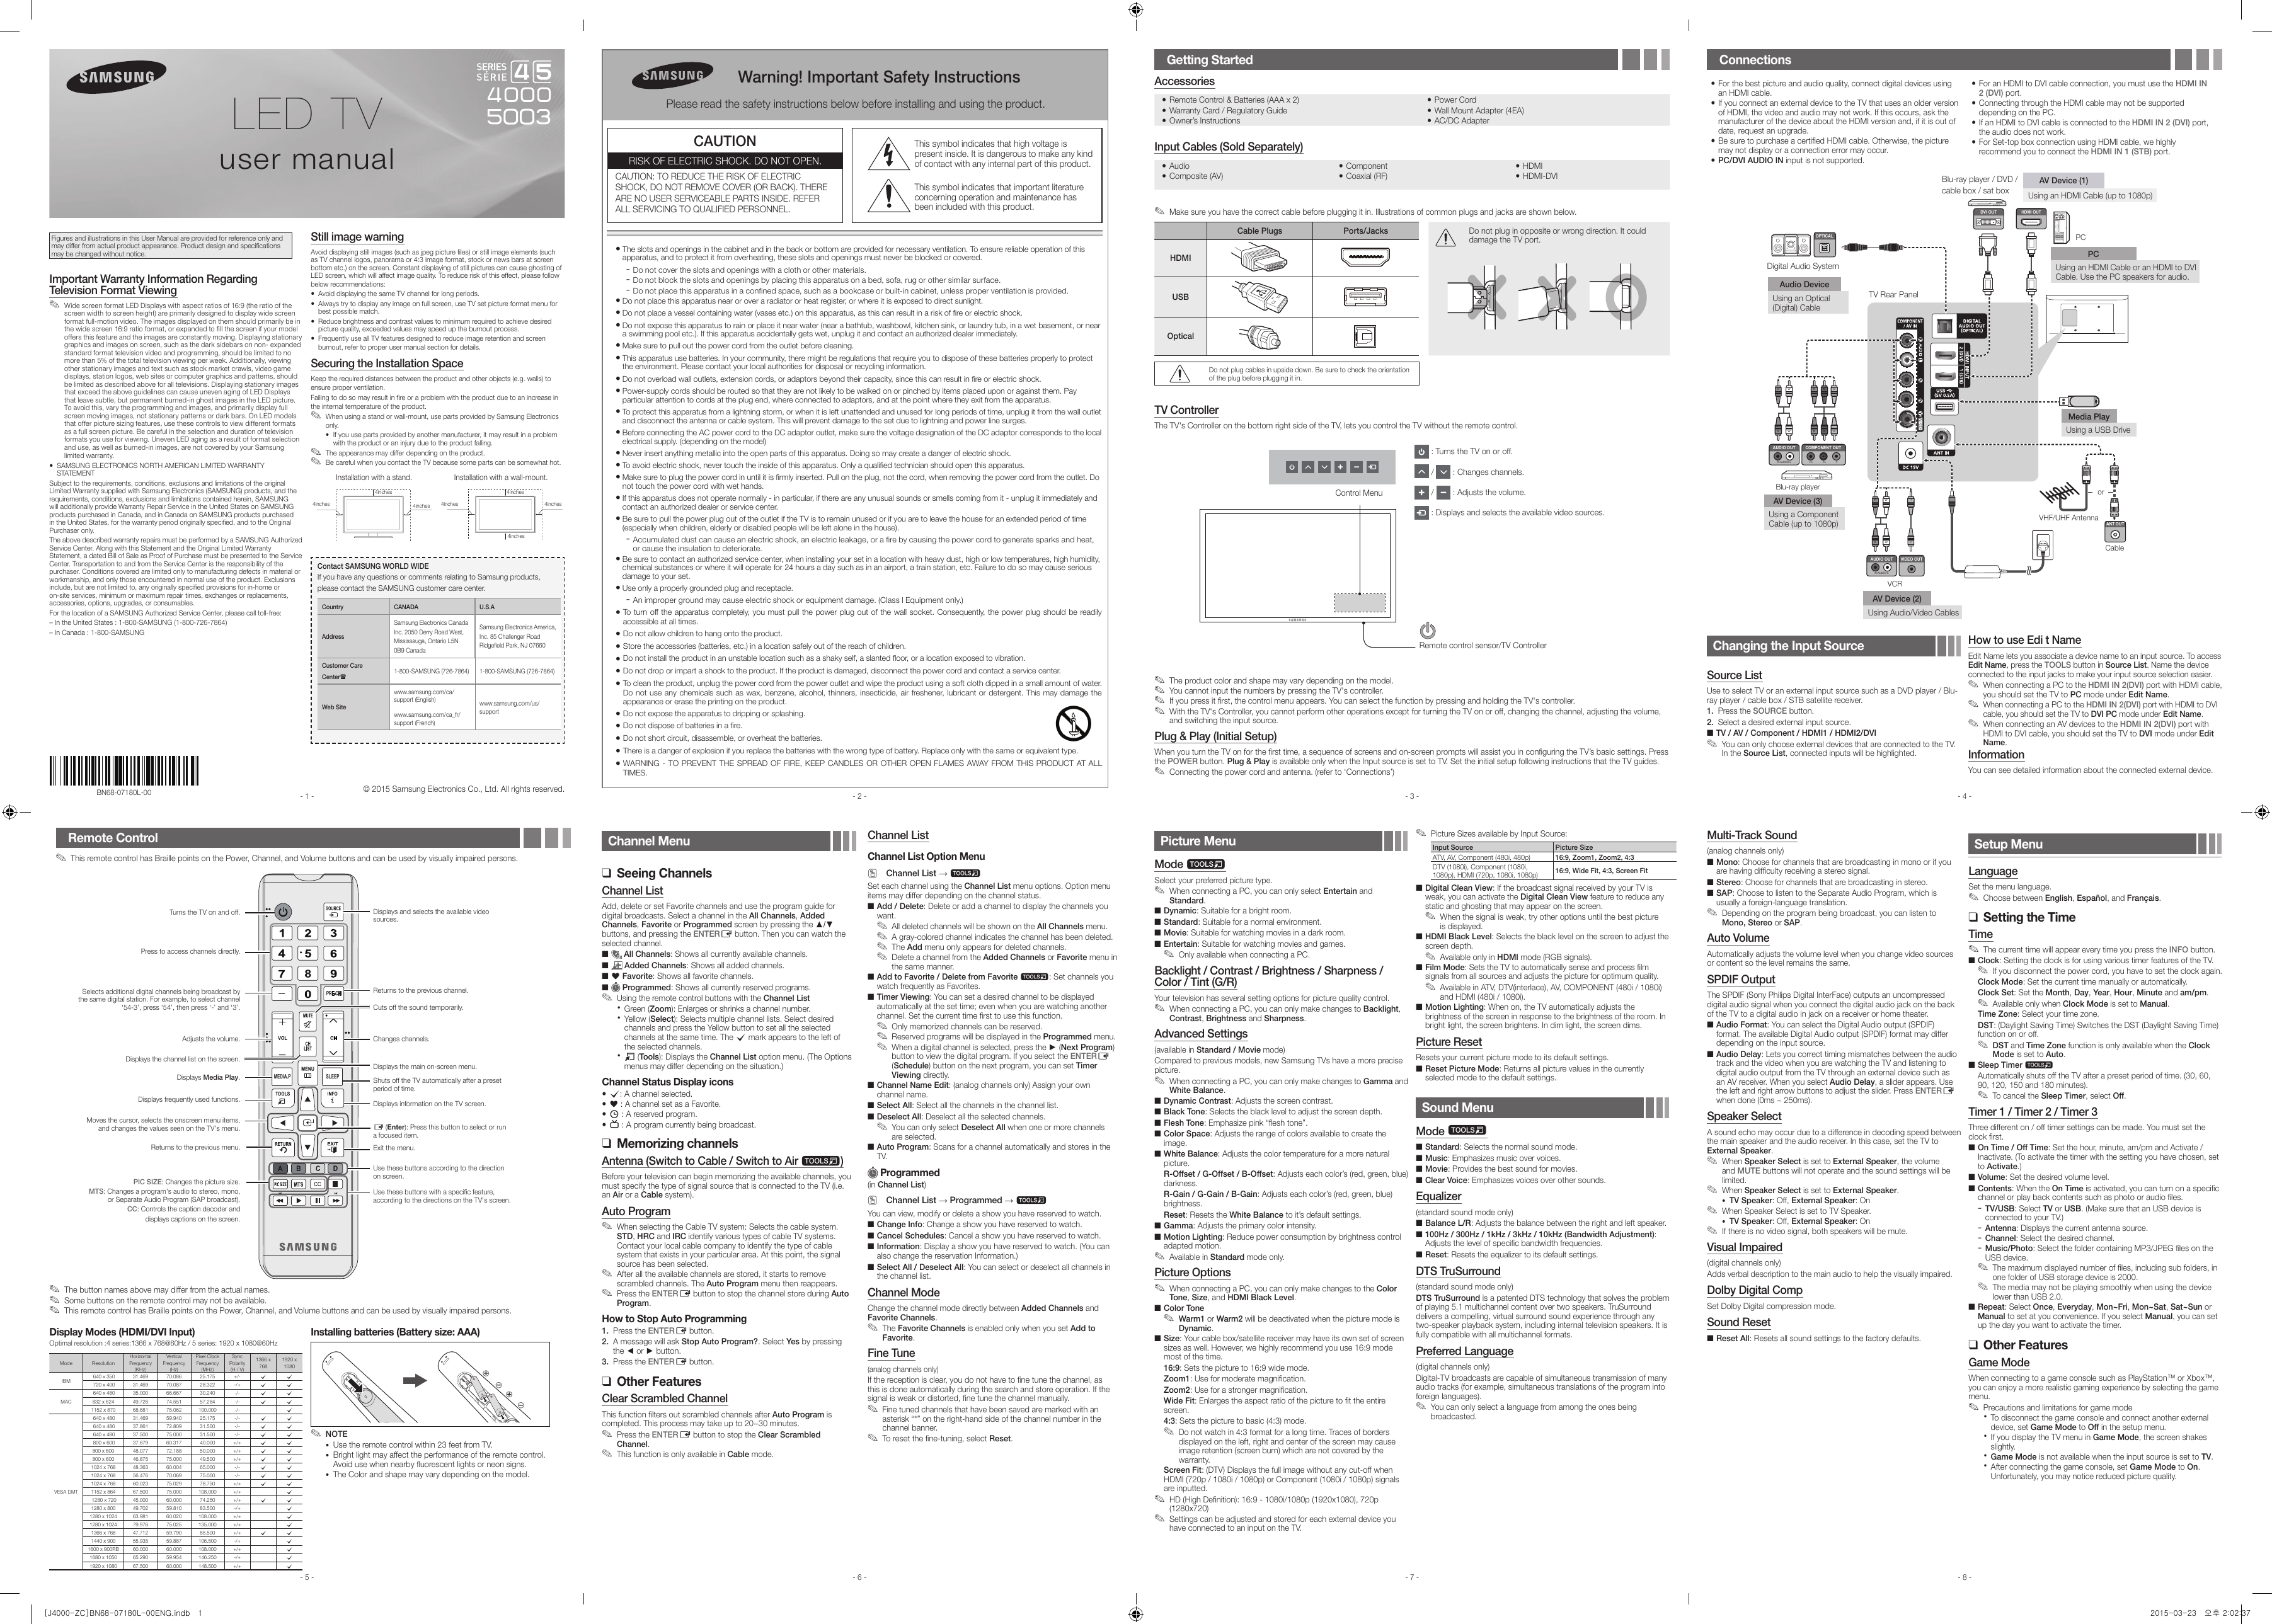 Page 1 of 2 - Samsung UN32J4000AFXZA User Manual  To The 674f9b5b-1477-429e-b017-c0d6c1094d72